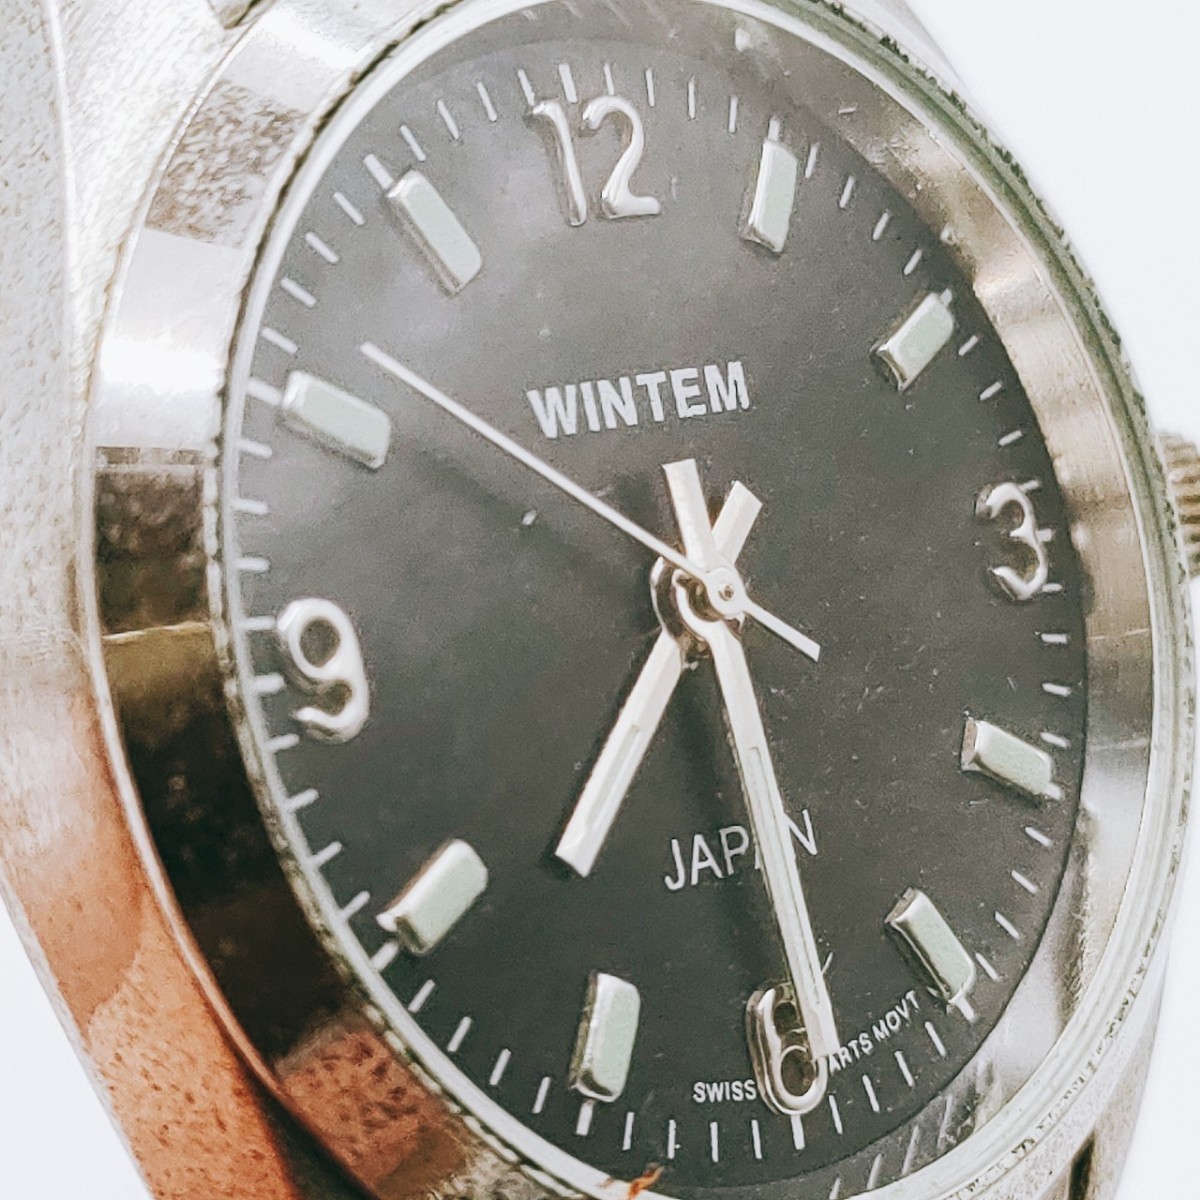 #166 WINTEM JAPAN 腕時計 アナログ 3針 黒色文字盤 シルバー色 レディース 時計 とけい トケイ アクセ ヴィンテージ アンティーク _画像3